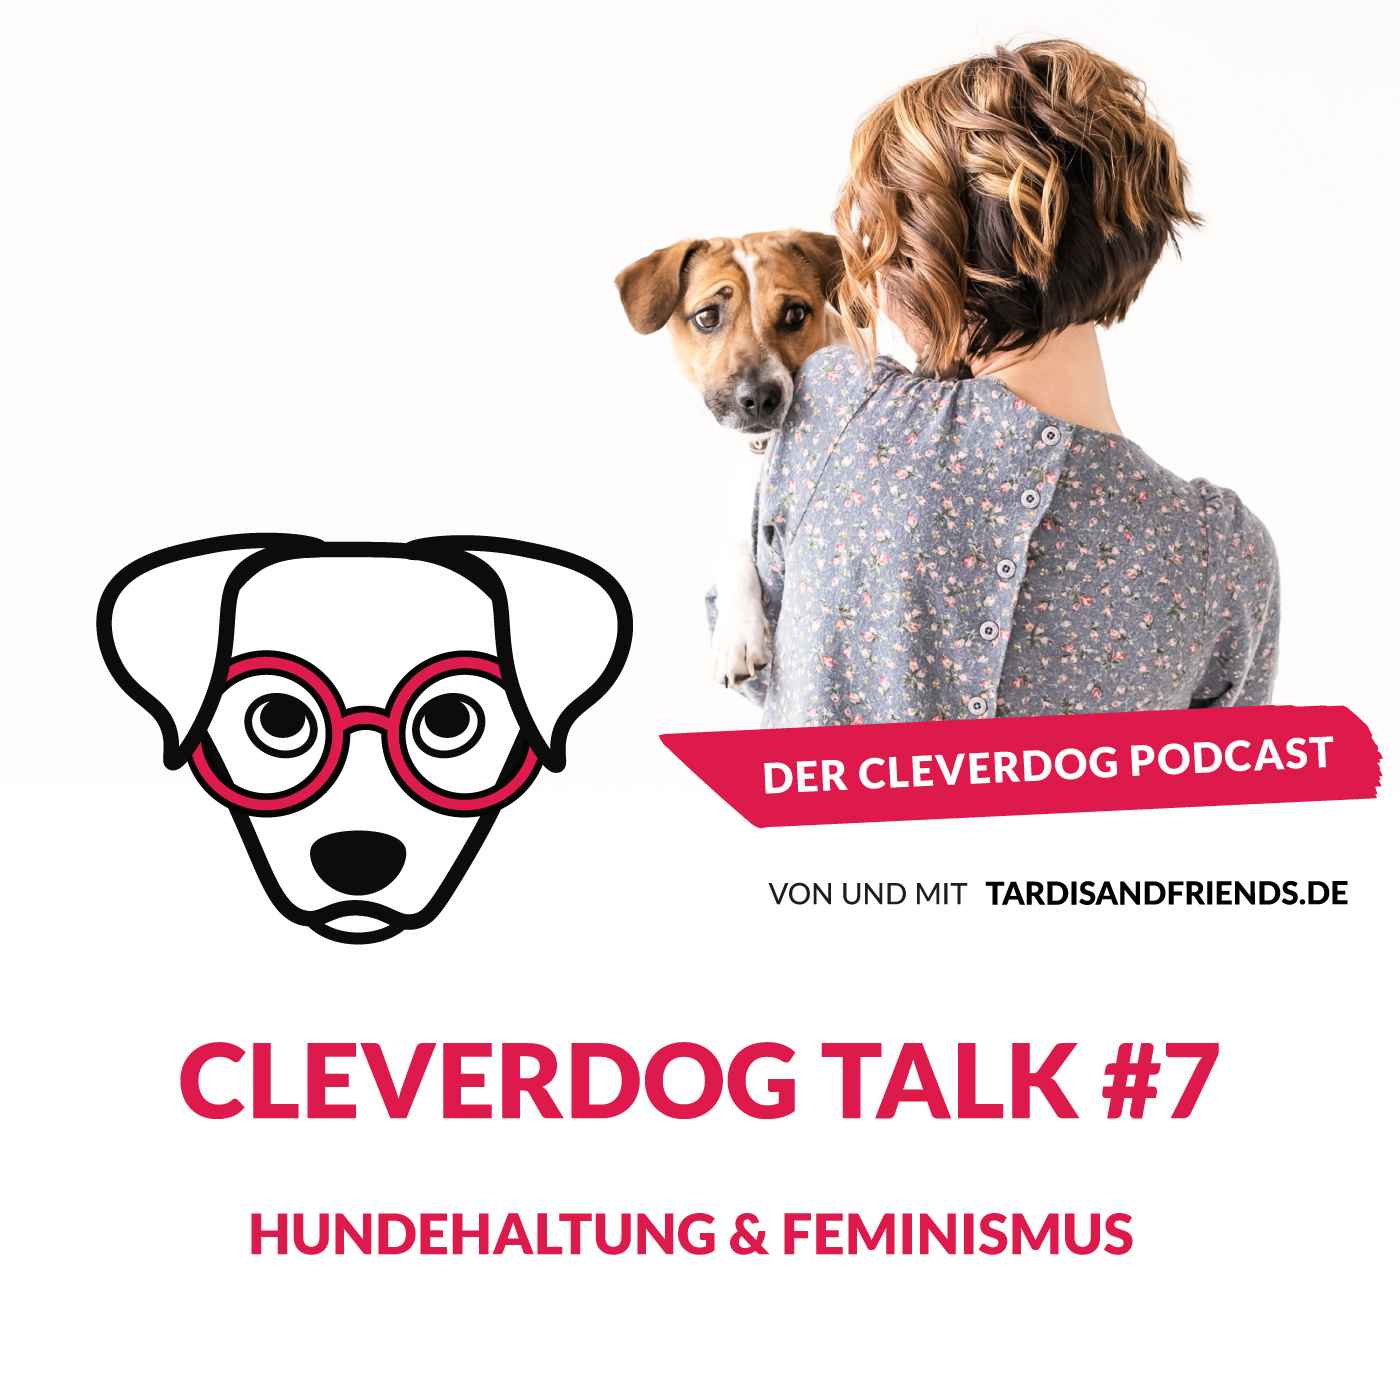 Cleverdog Talk #7 – Hundehaltung & Feminismus